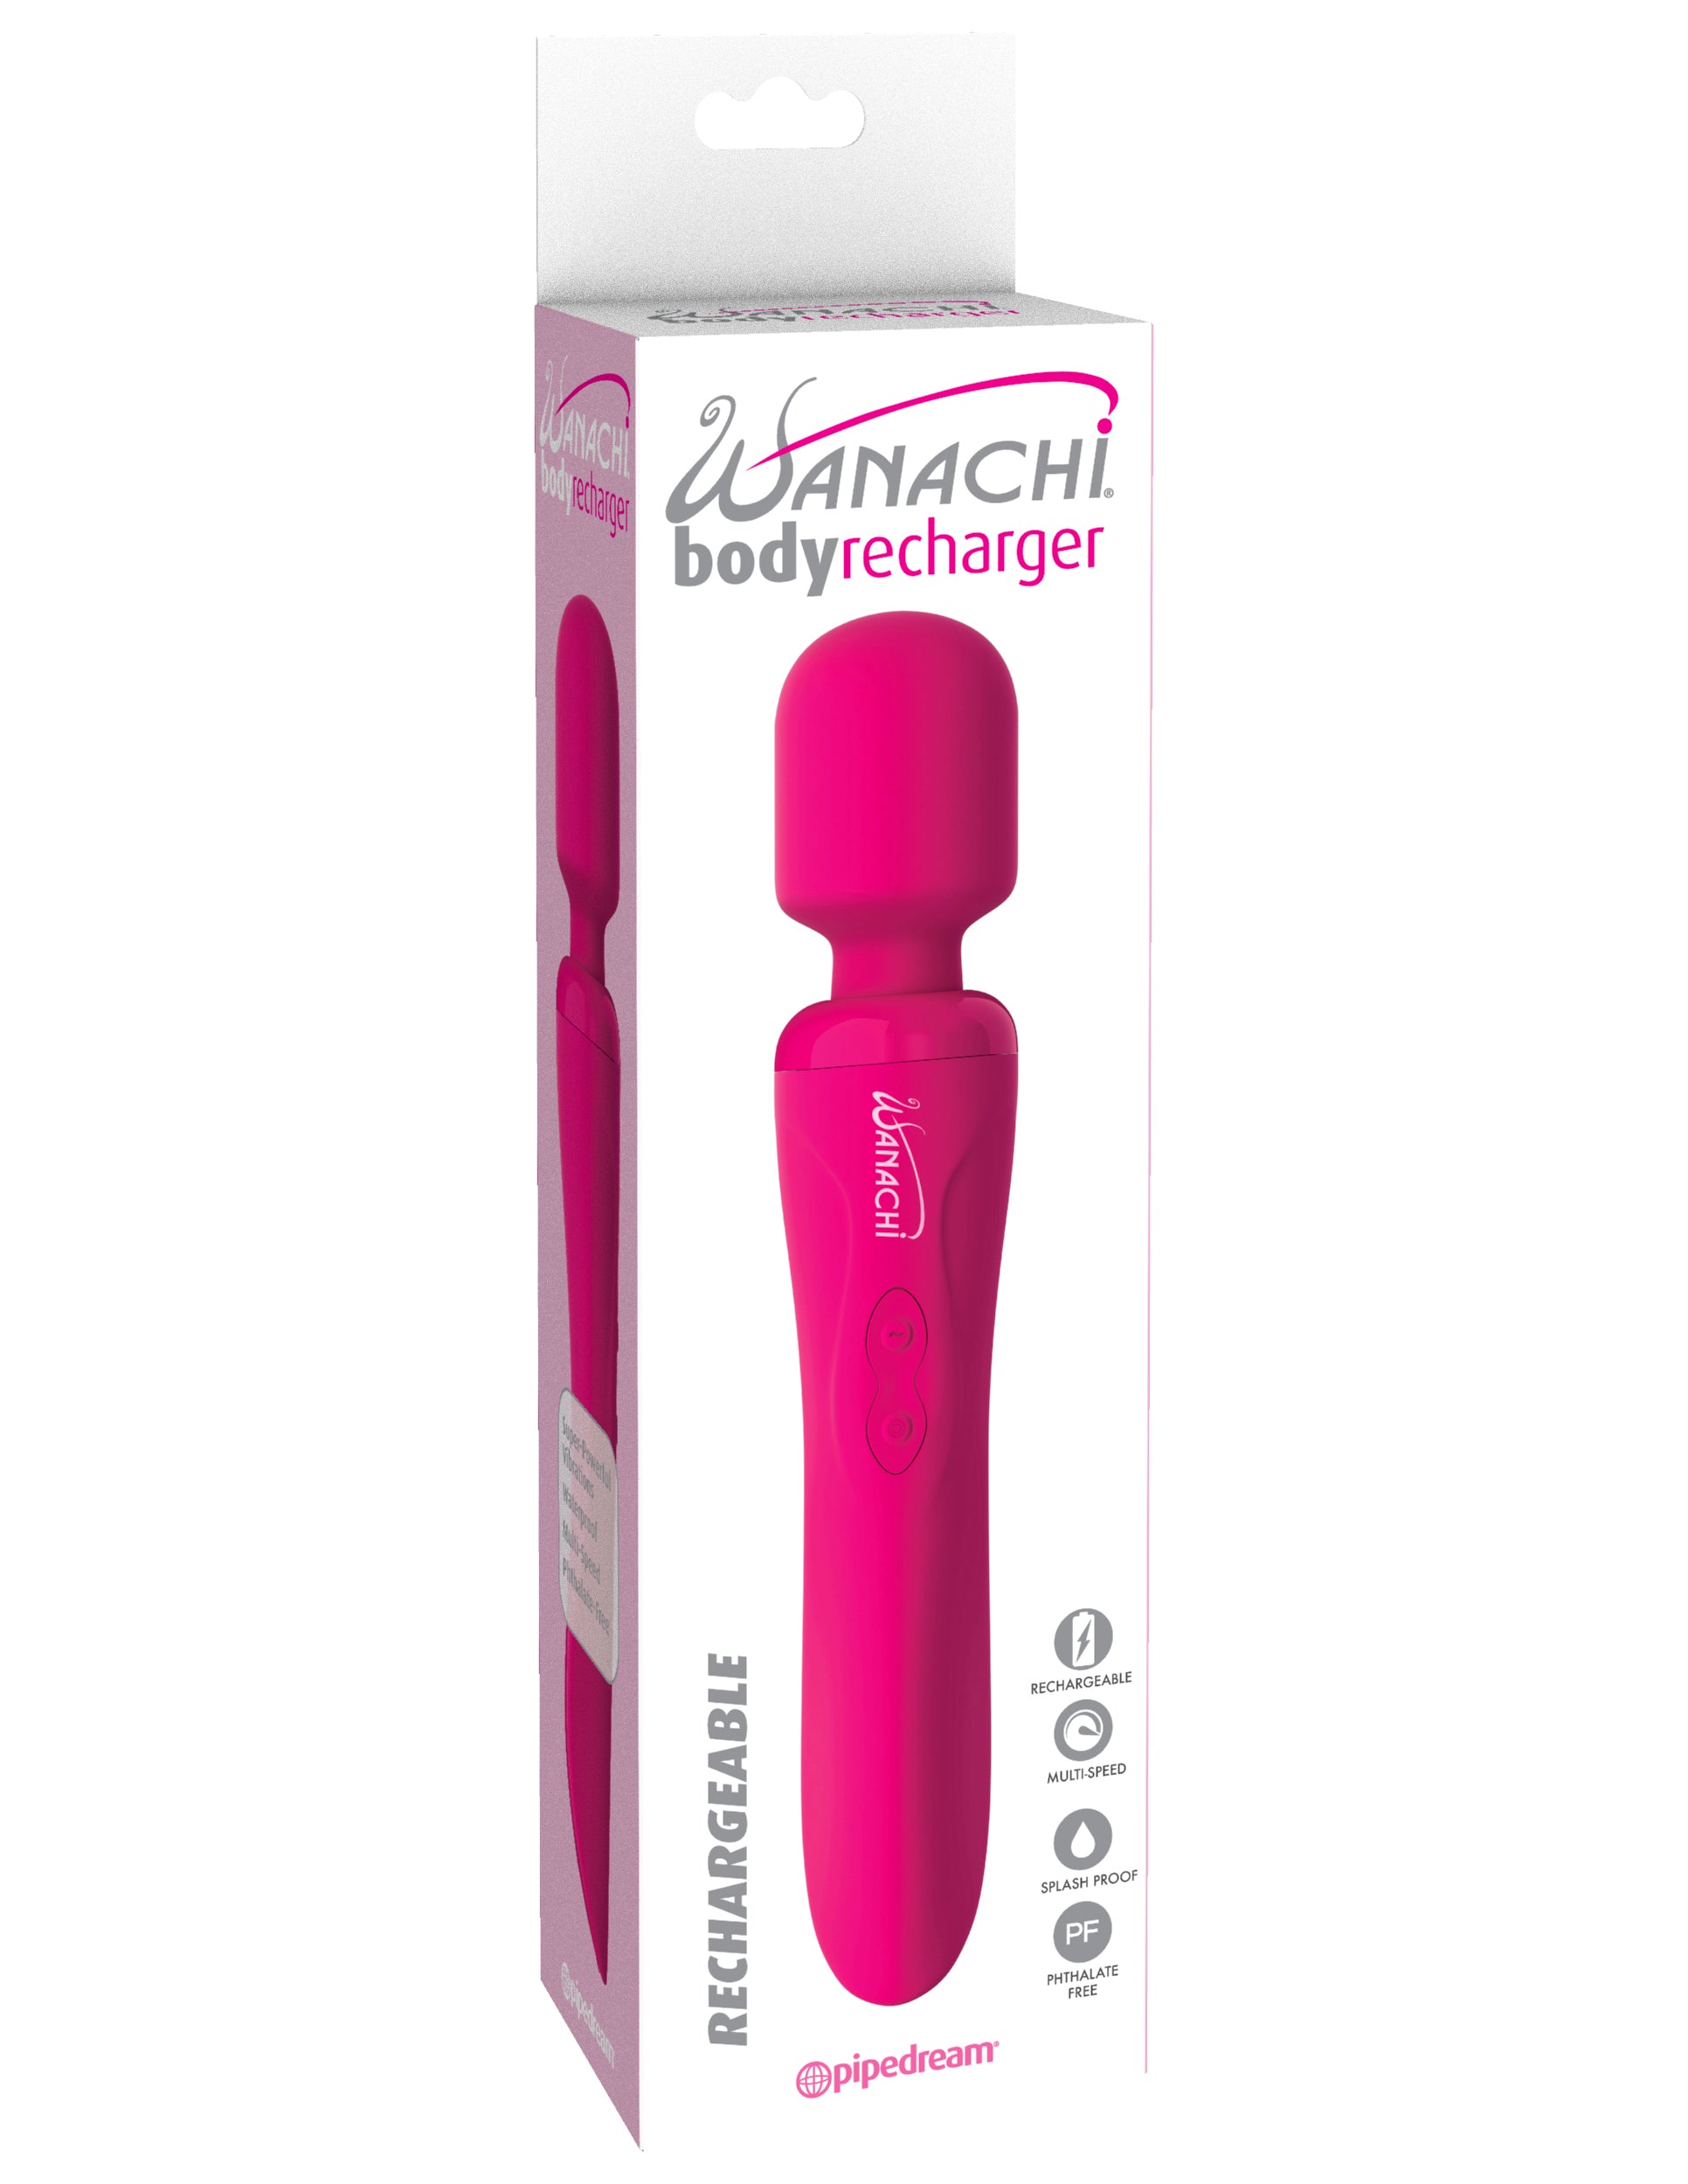 Wanachi Body Recharger Pink PD3039-11